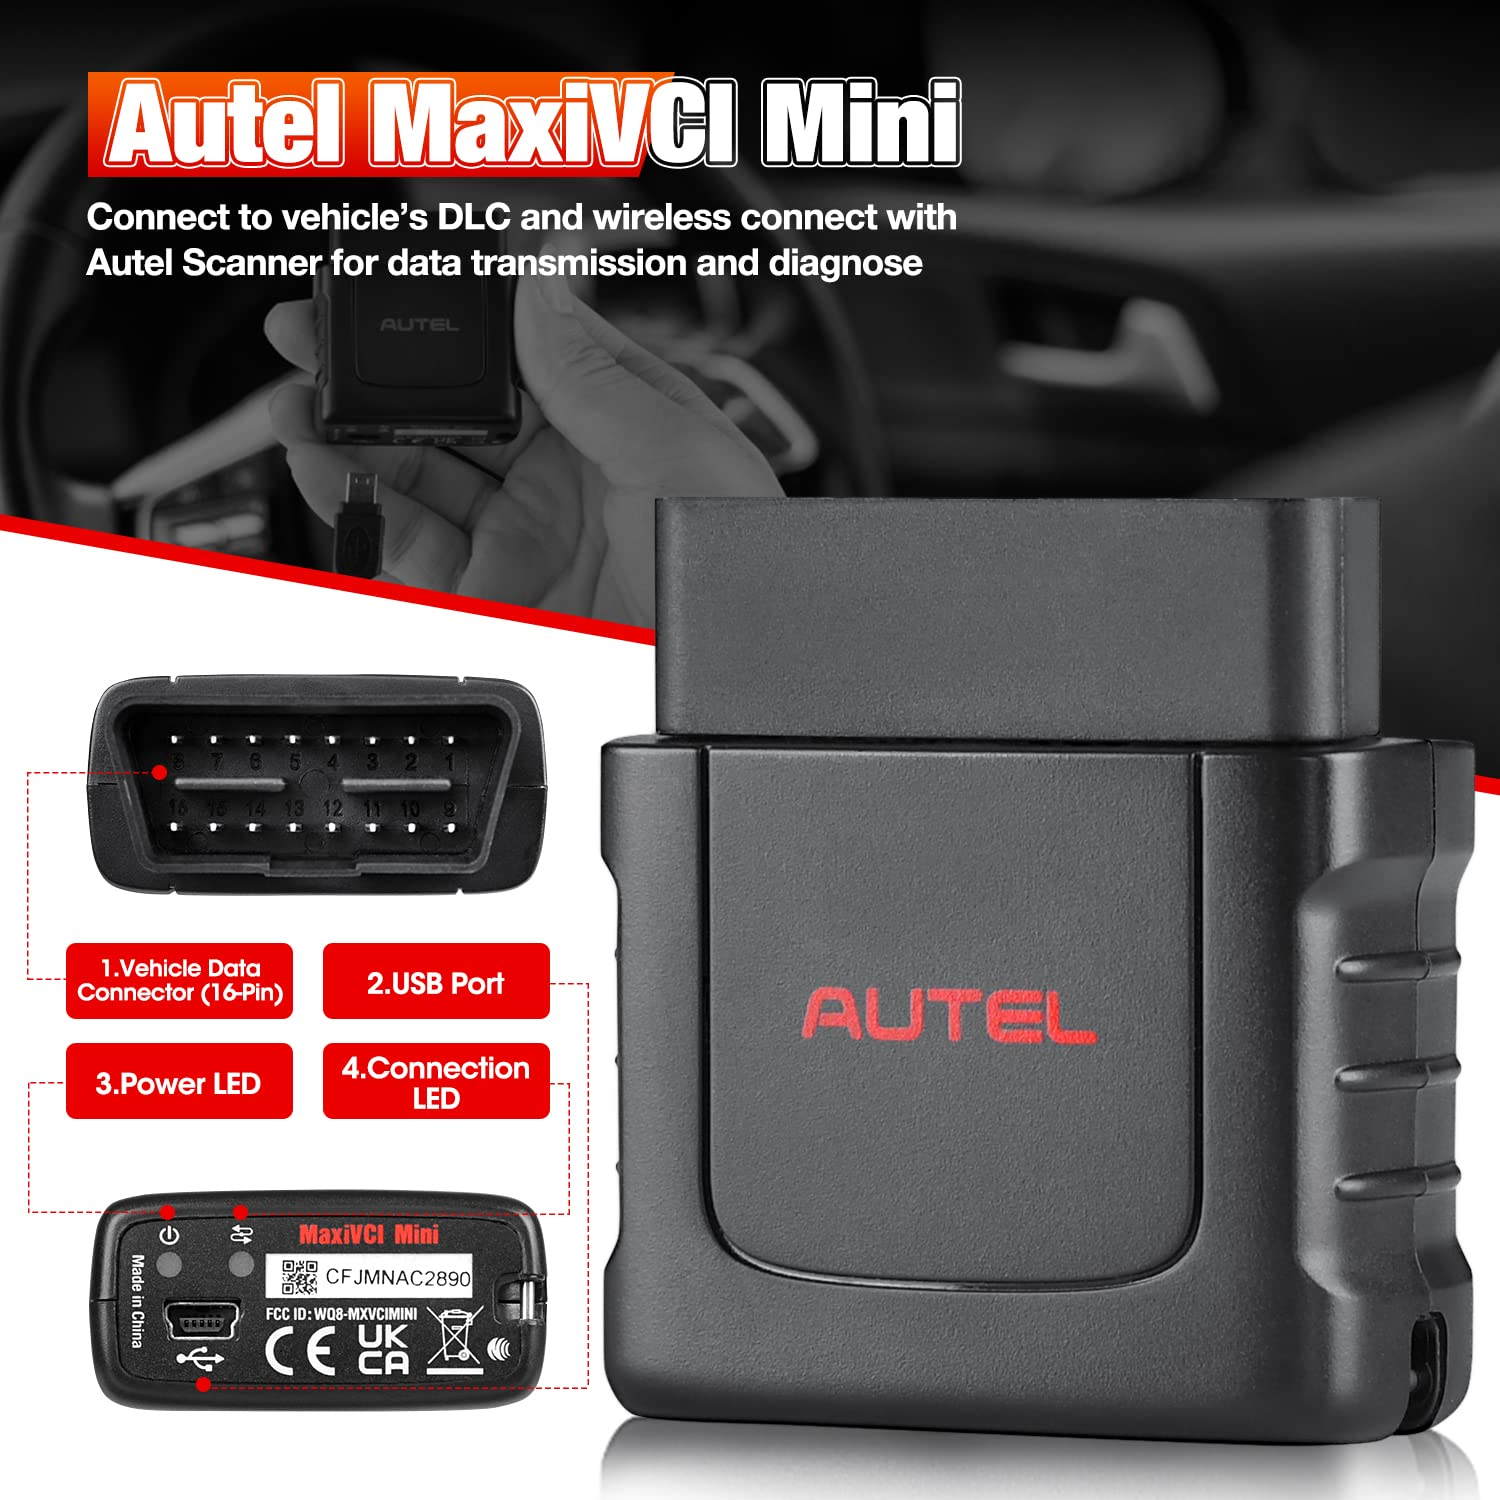 Autel MaxiVCI Mini Function Description